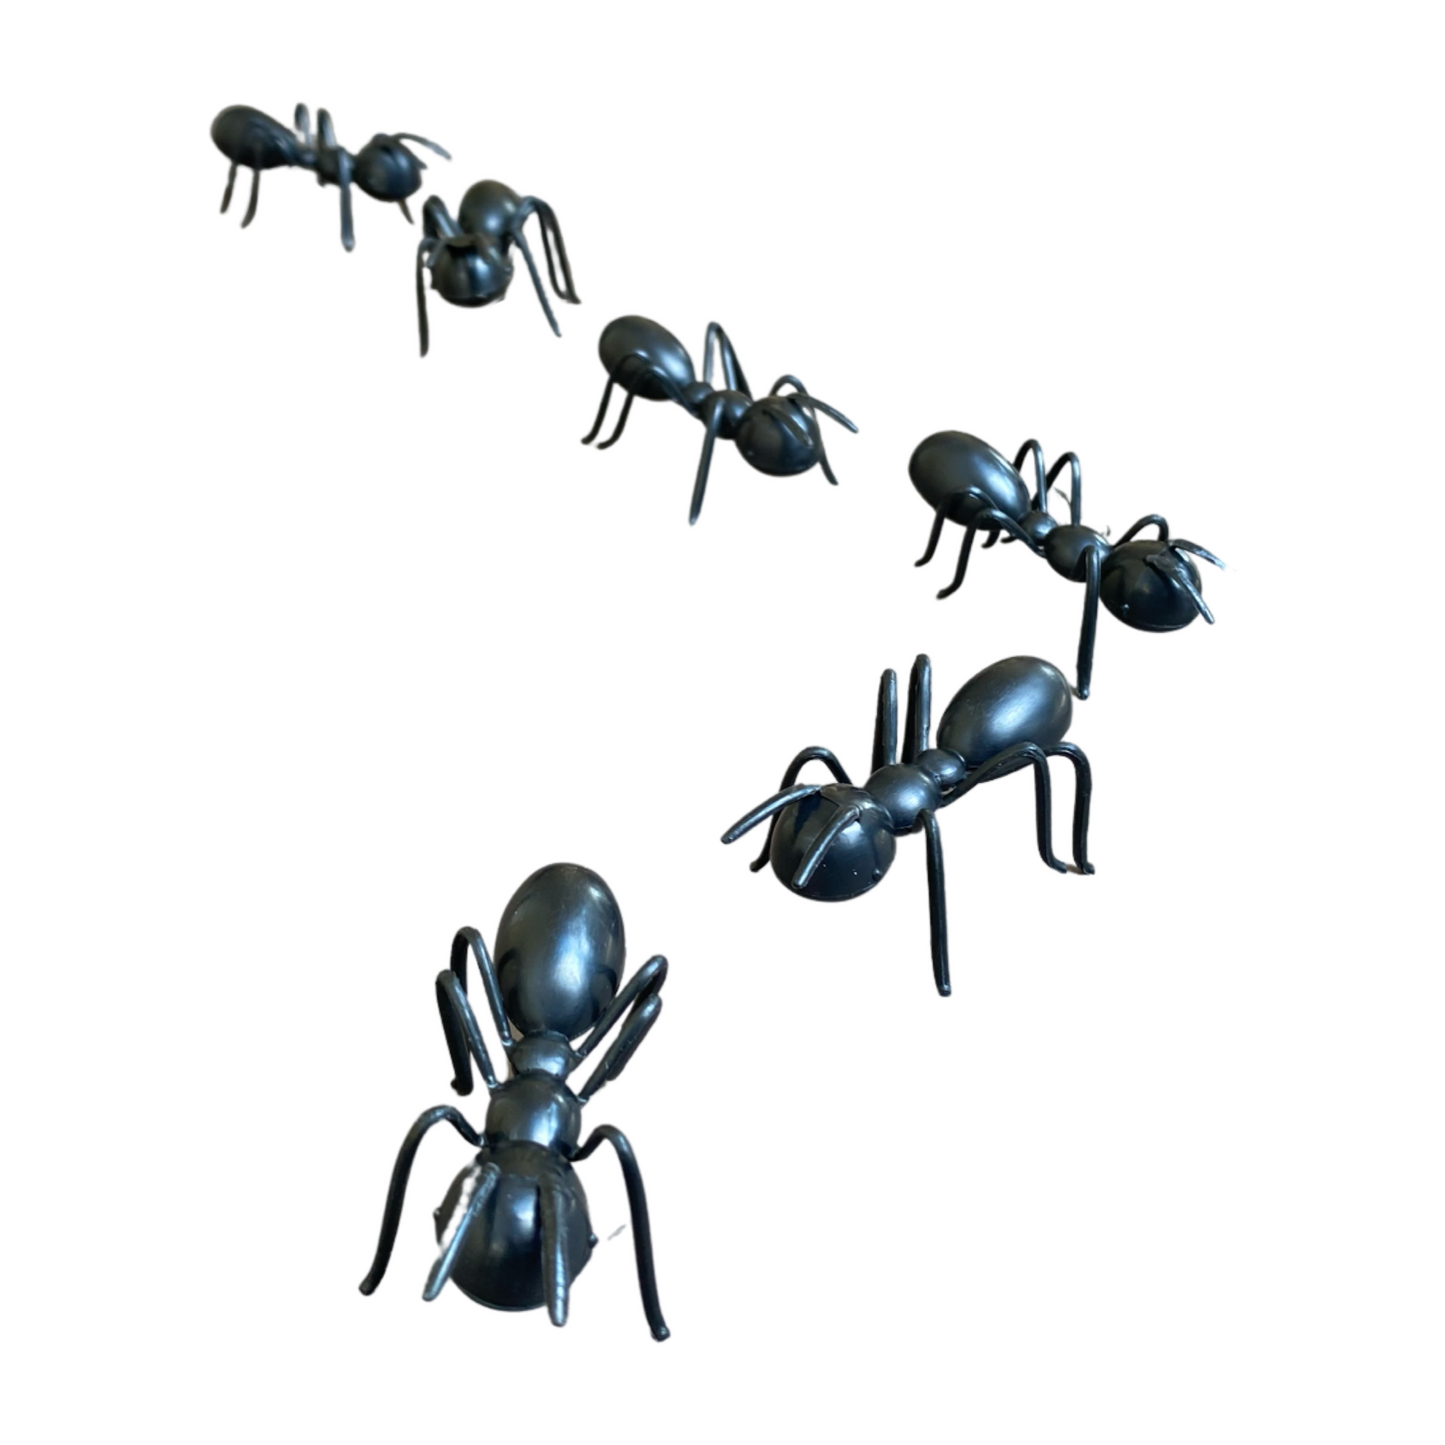 Large 3-D Ants (set of 12)